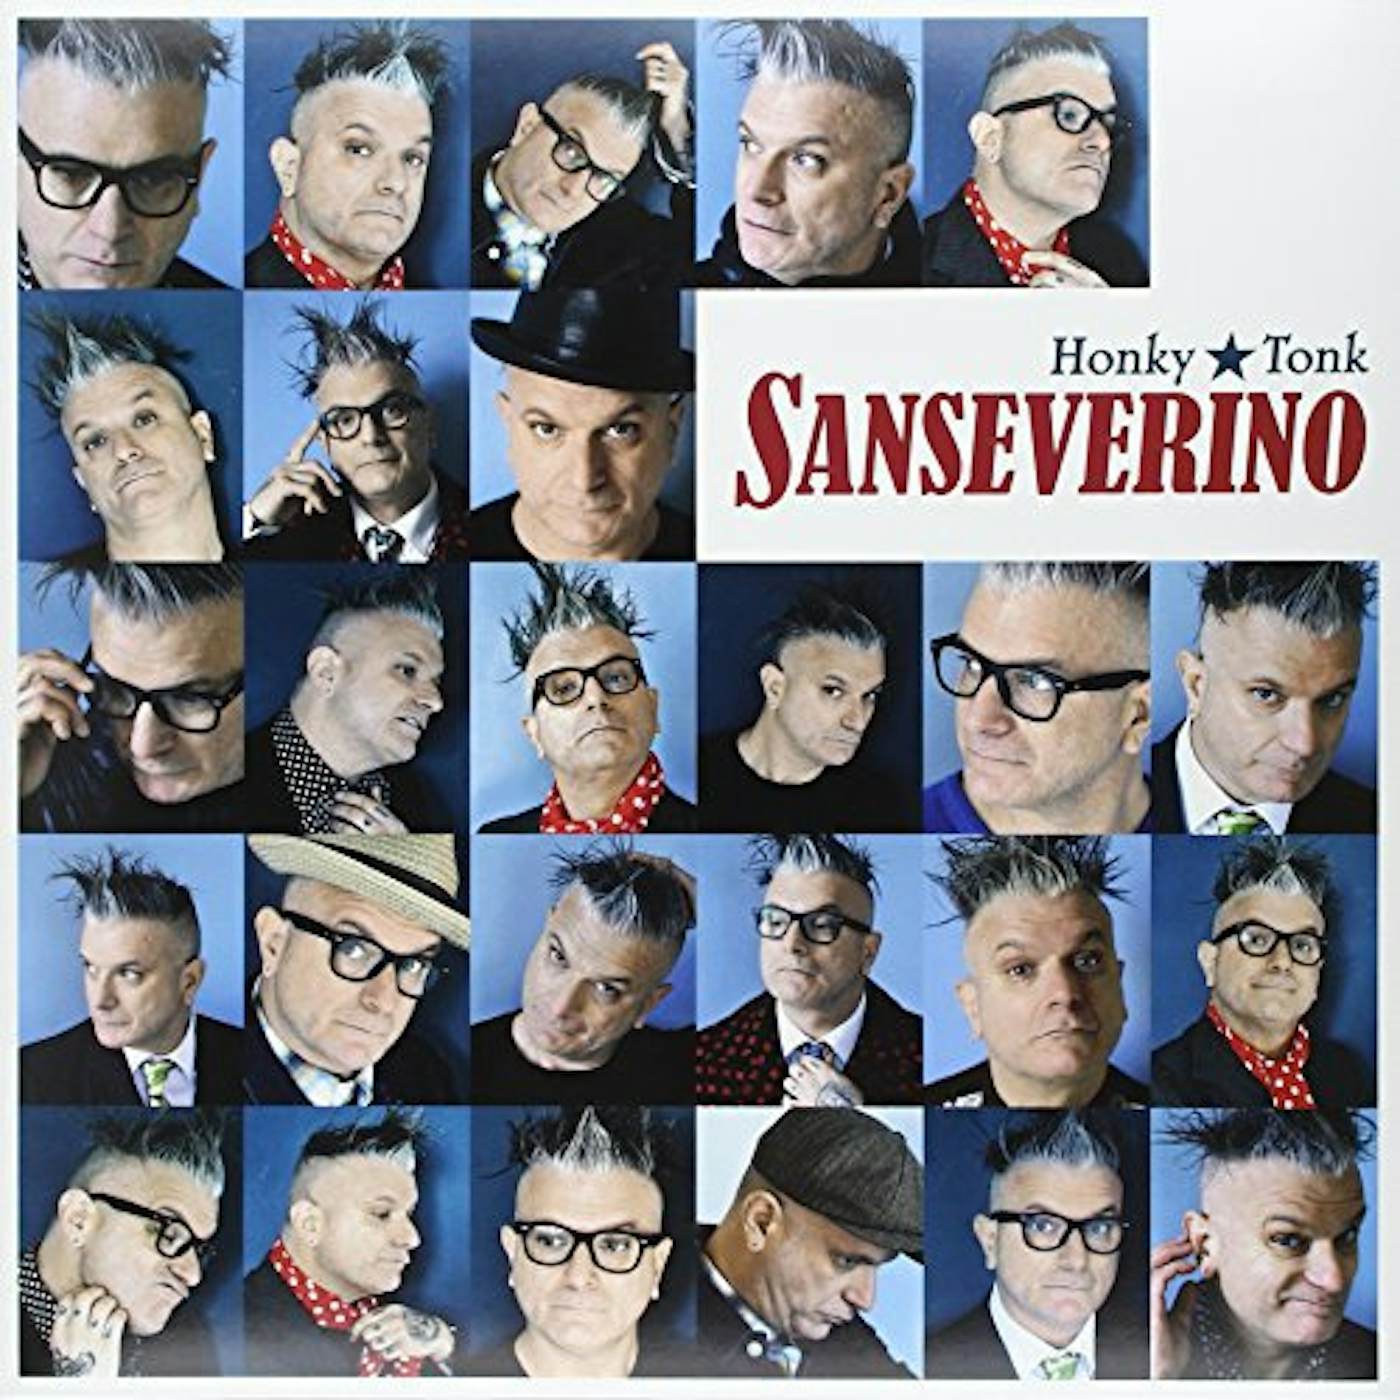 Sanseverino Honky Tonk Vinyl Record